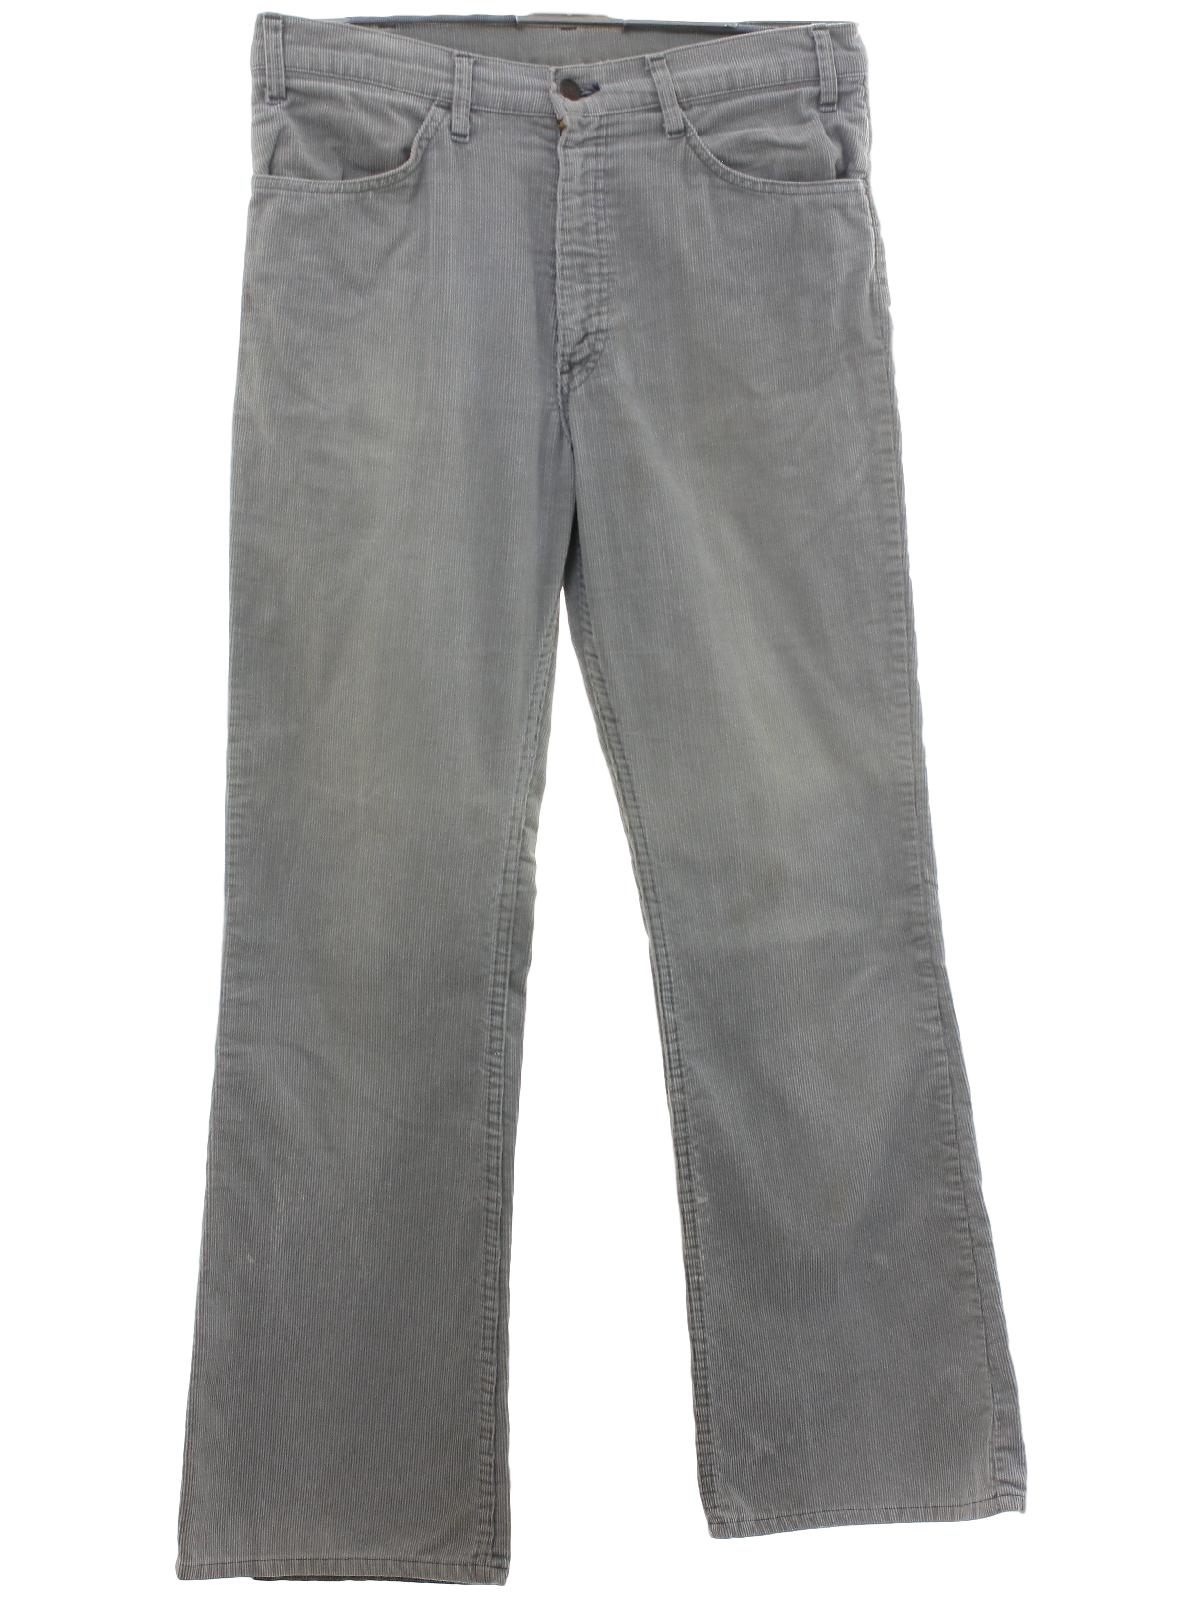 levi's gray pants